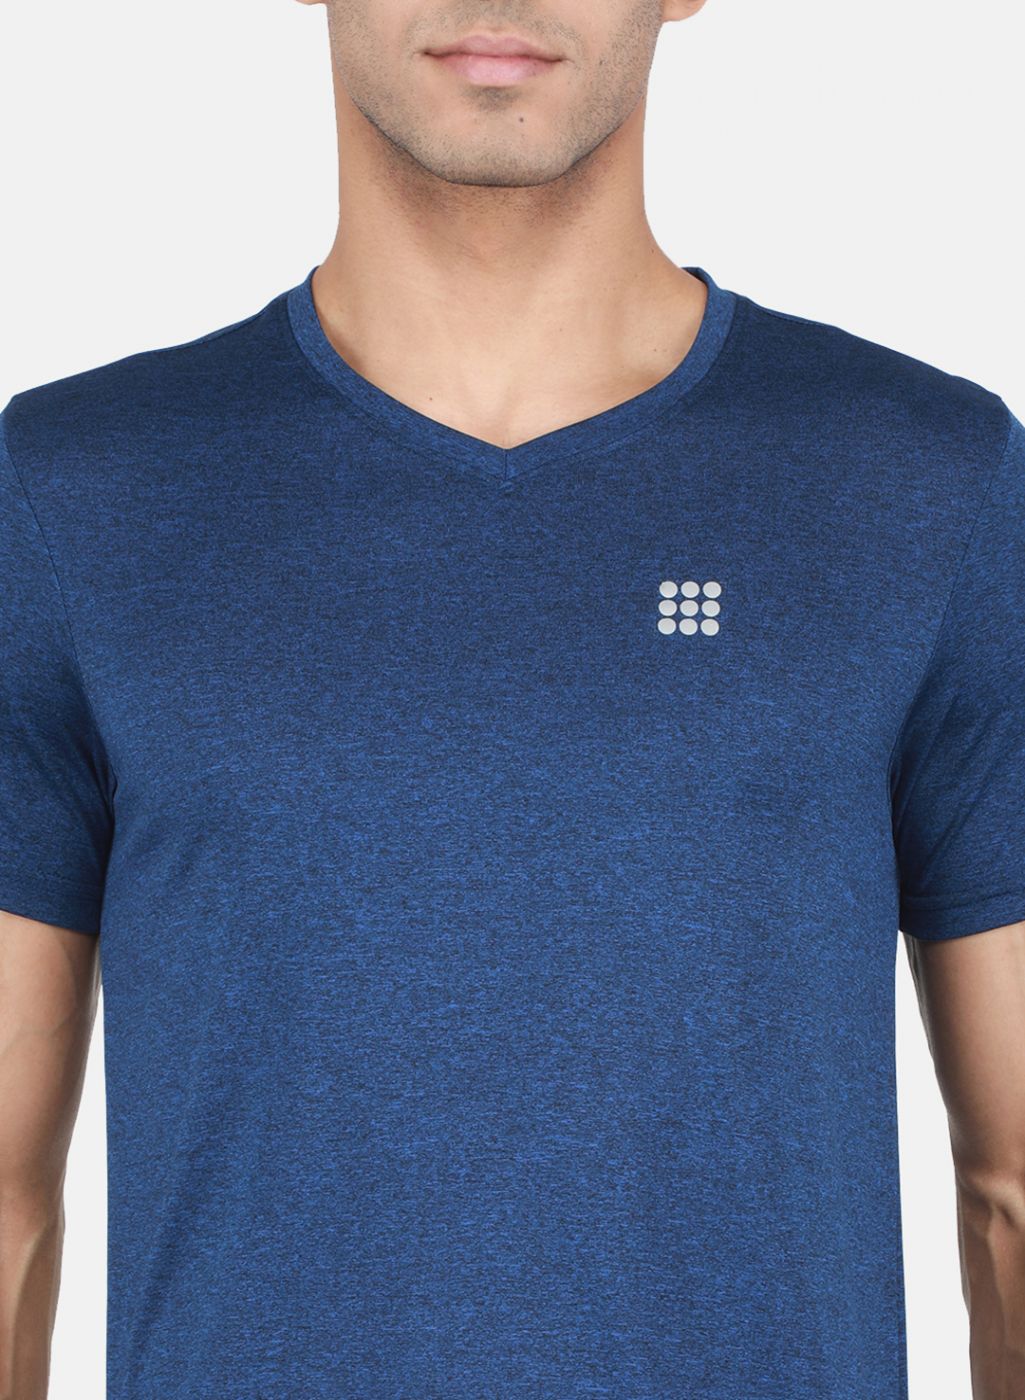 Rock-it Men Blue Solid T-Shirt